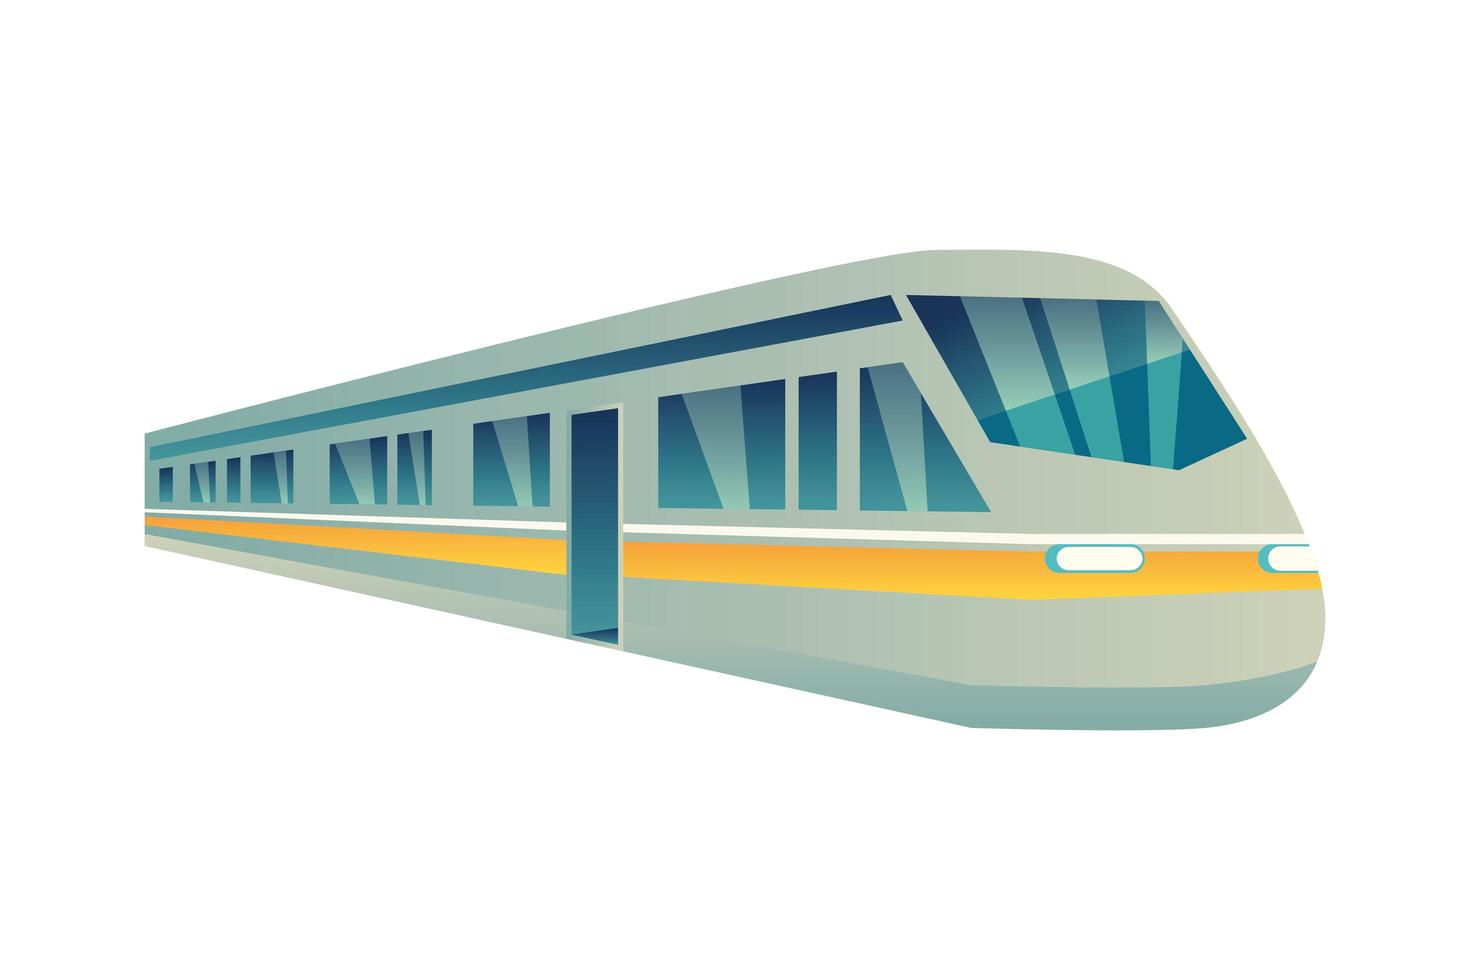 tunnelbanetransporthastighet vektor